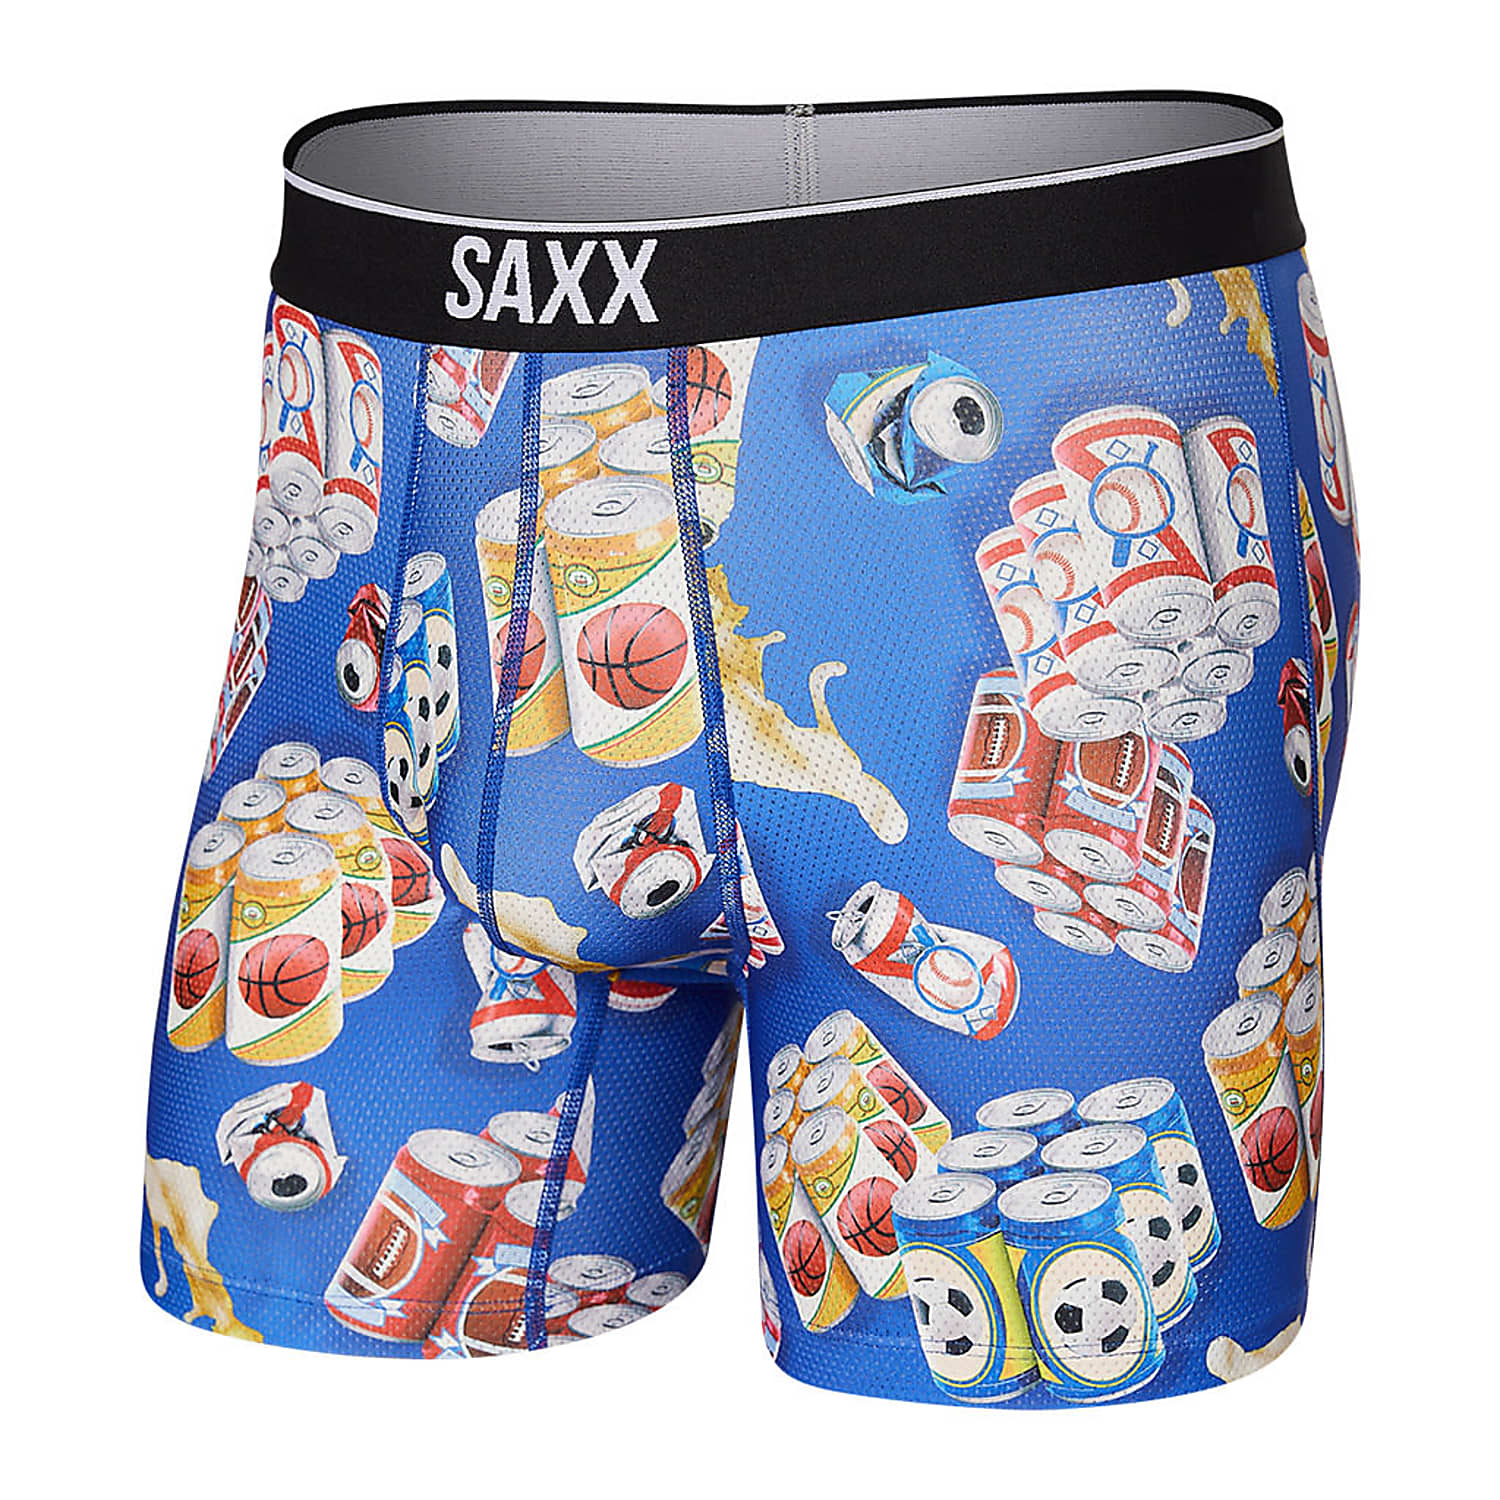 Buy Saxx M DROPTEMP COOLING COTTON TRUNK, Tidal Camo - Blue online